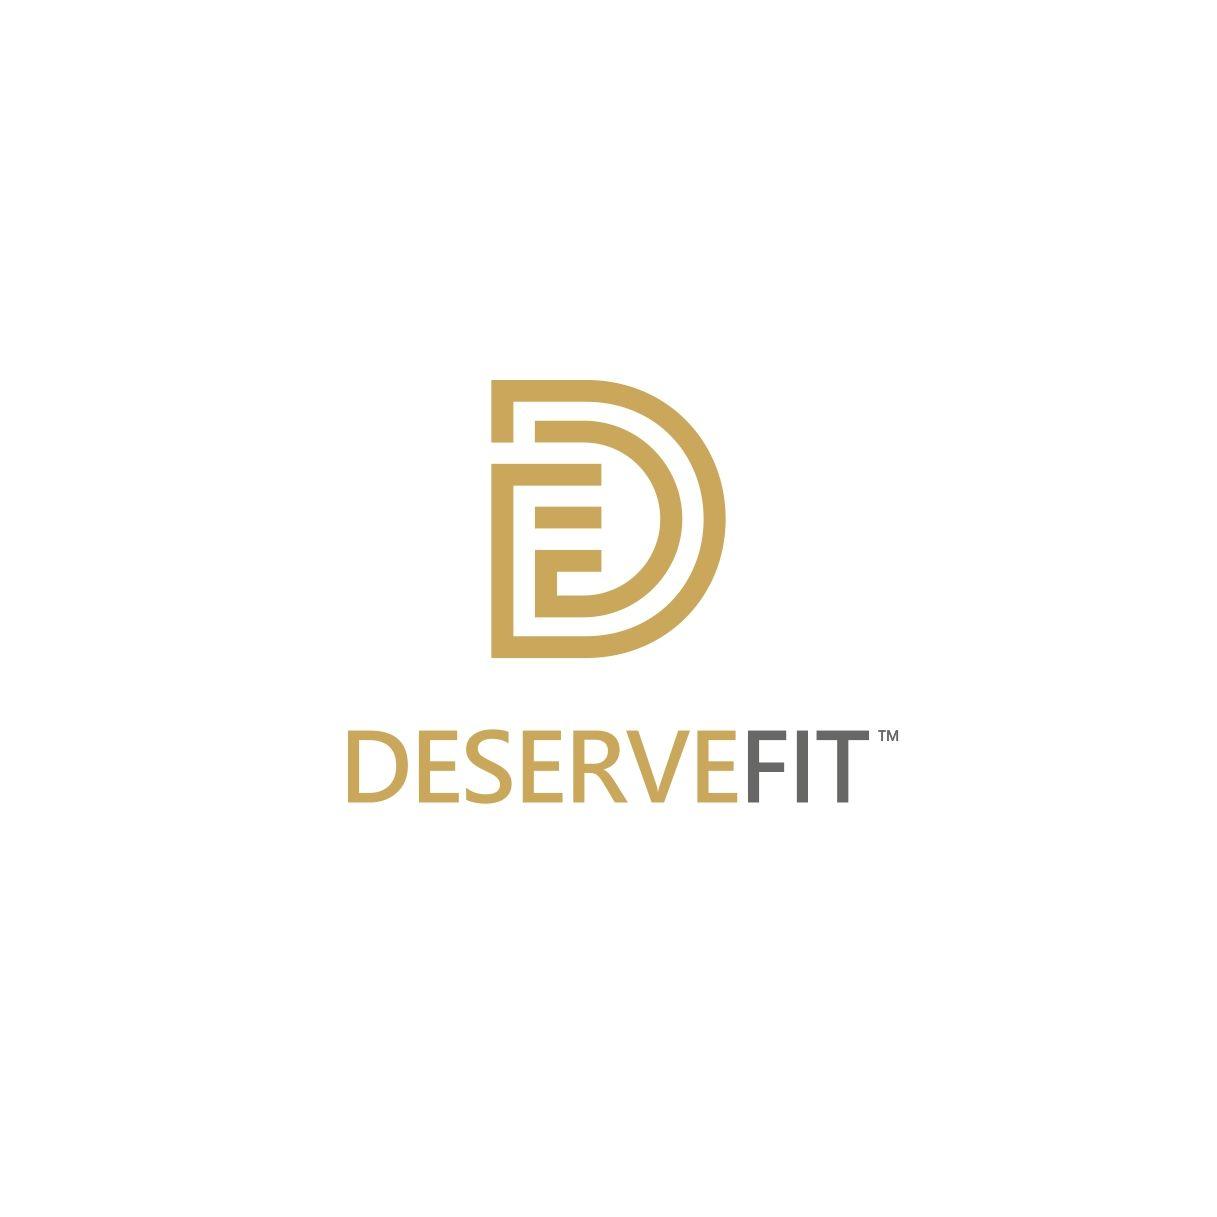 Deservefit